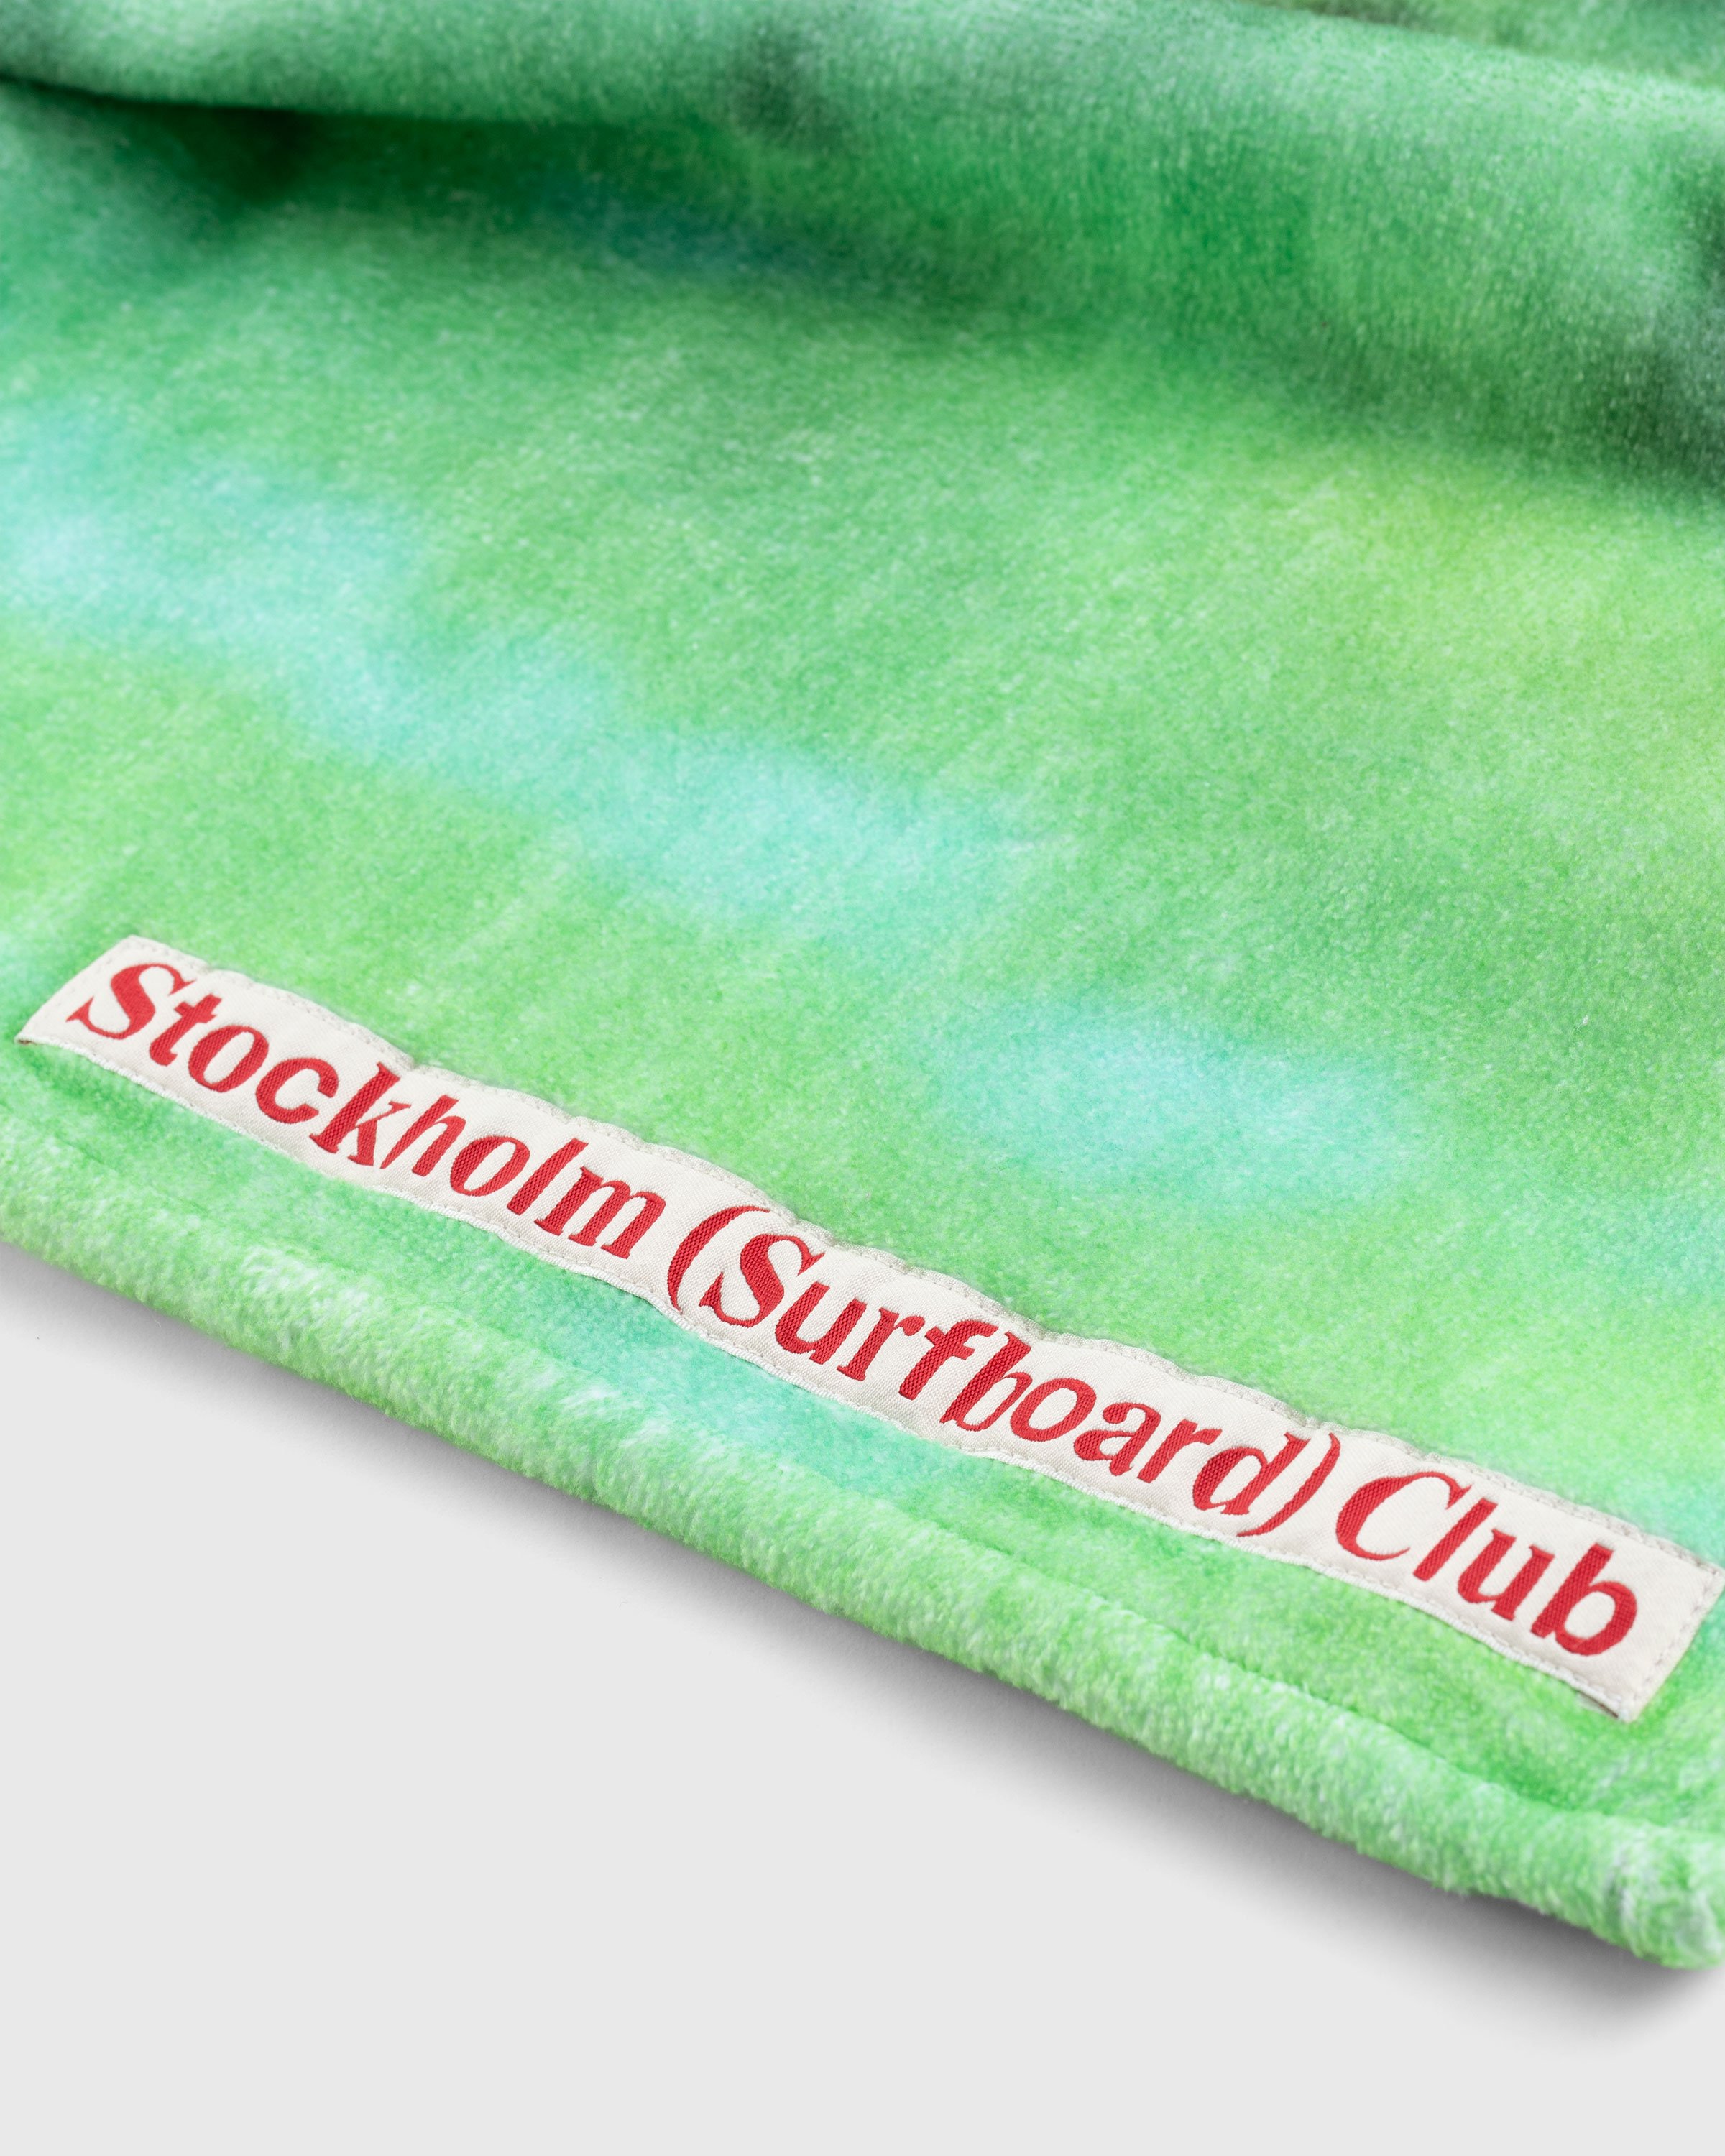 Stockholm Surfboard Club - Horse Printed Beach Towel Multi - Lifestyle - Multi - Image 3